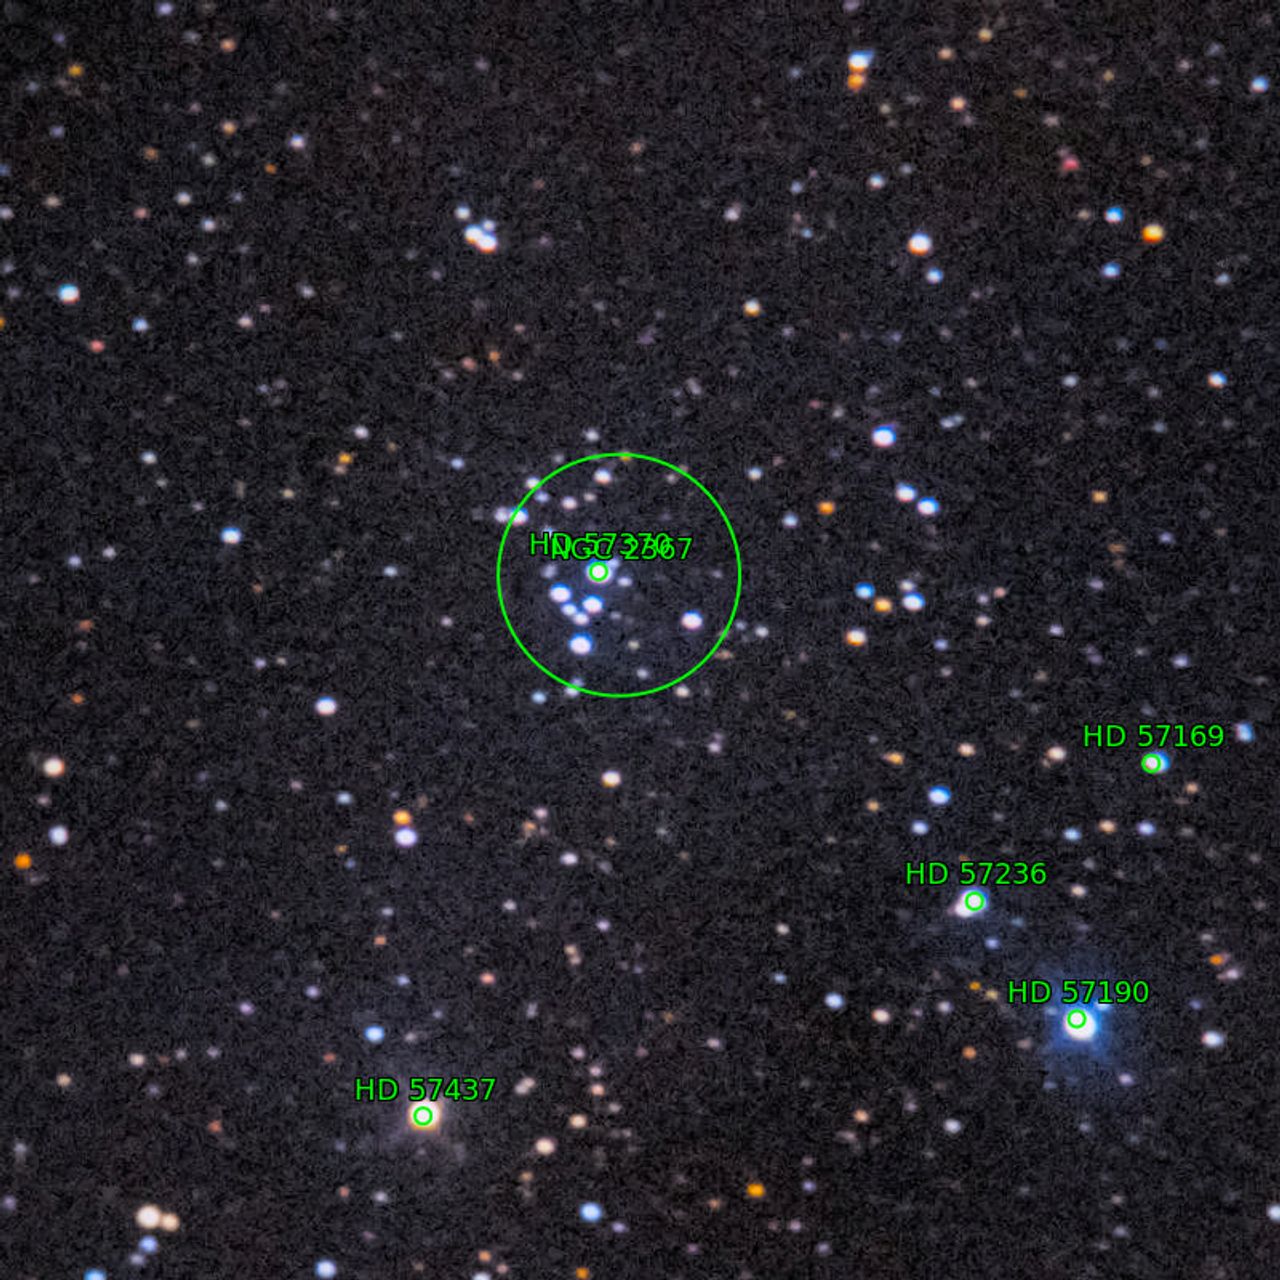 Annotation around NGC2367